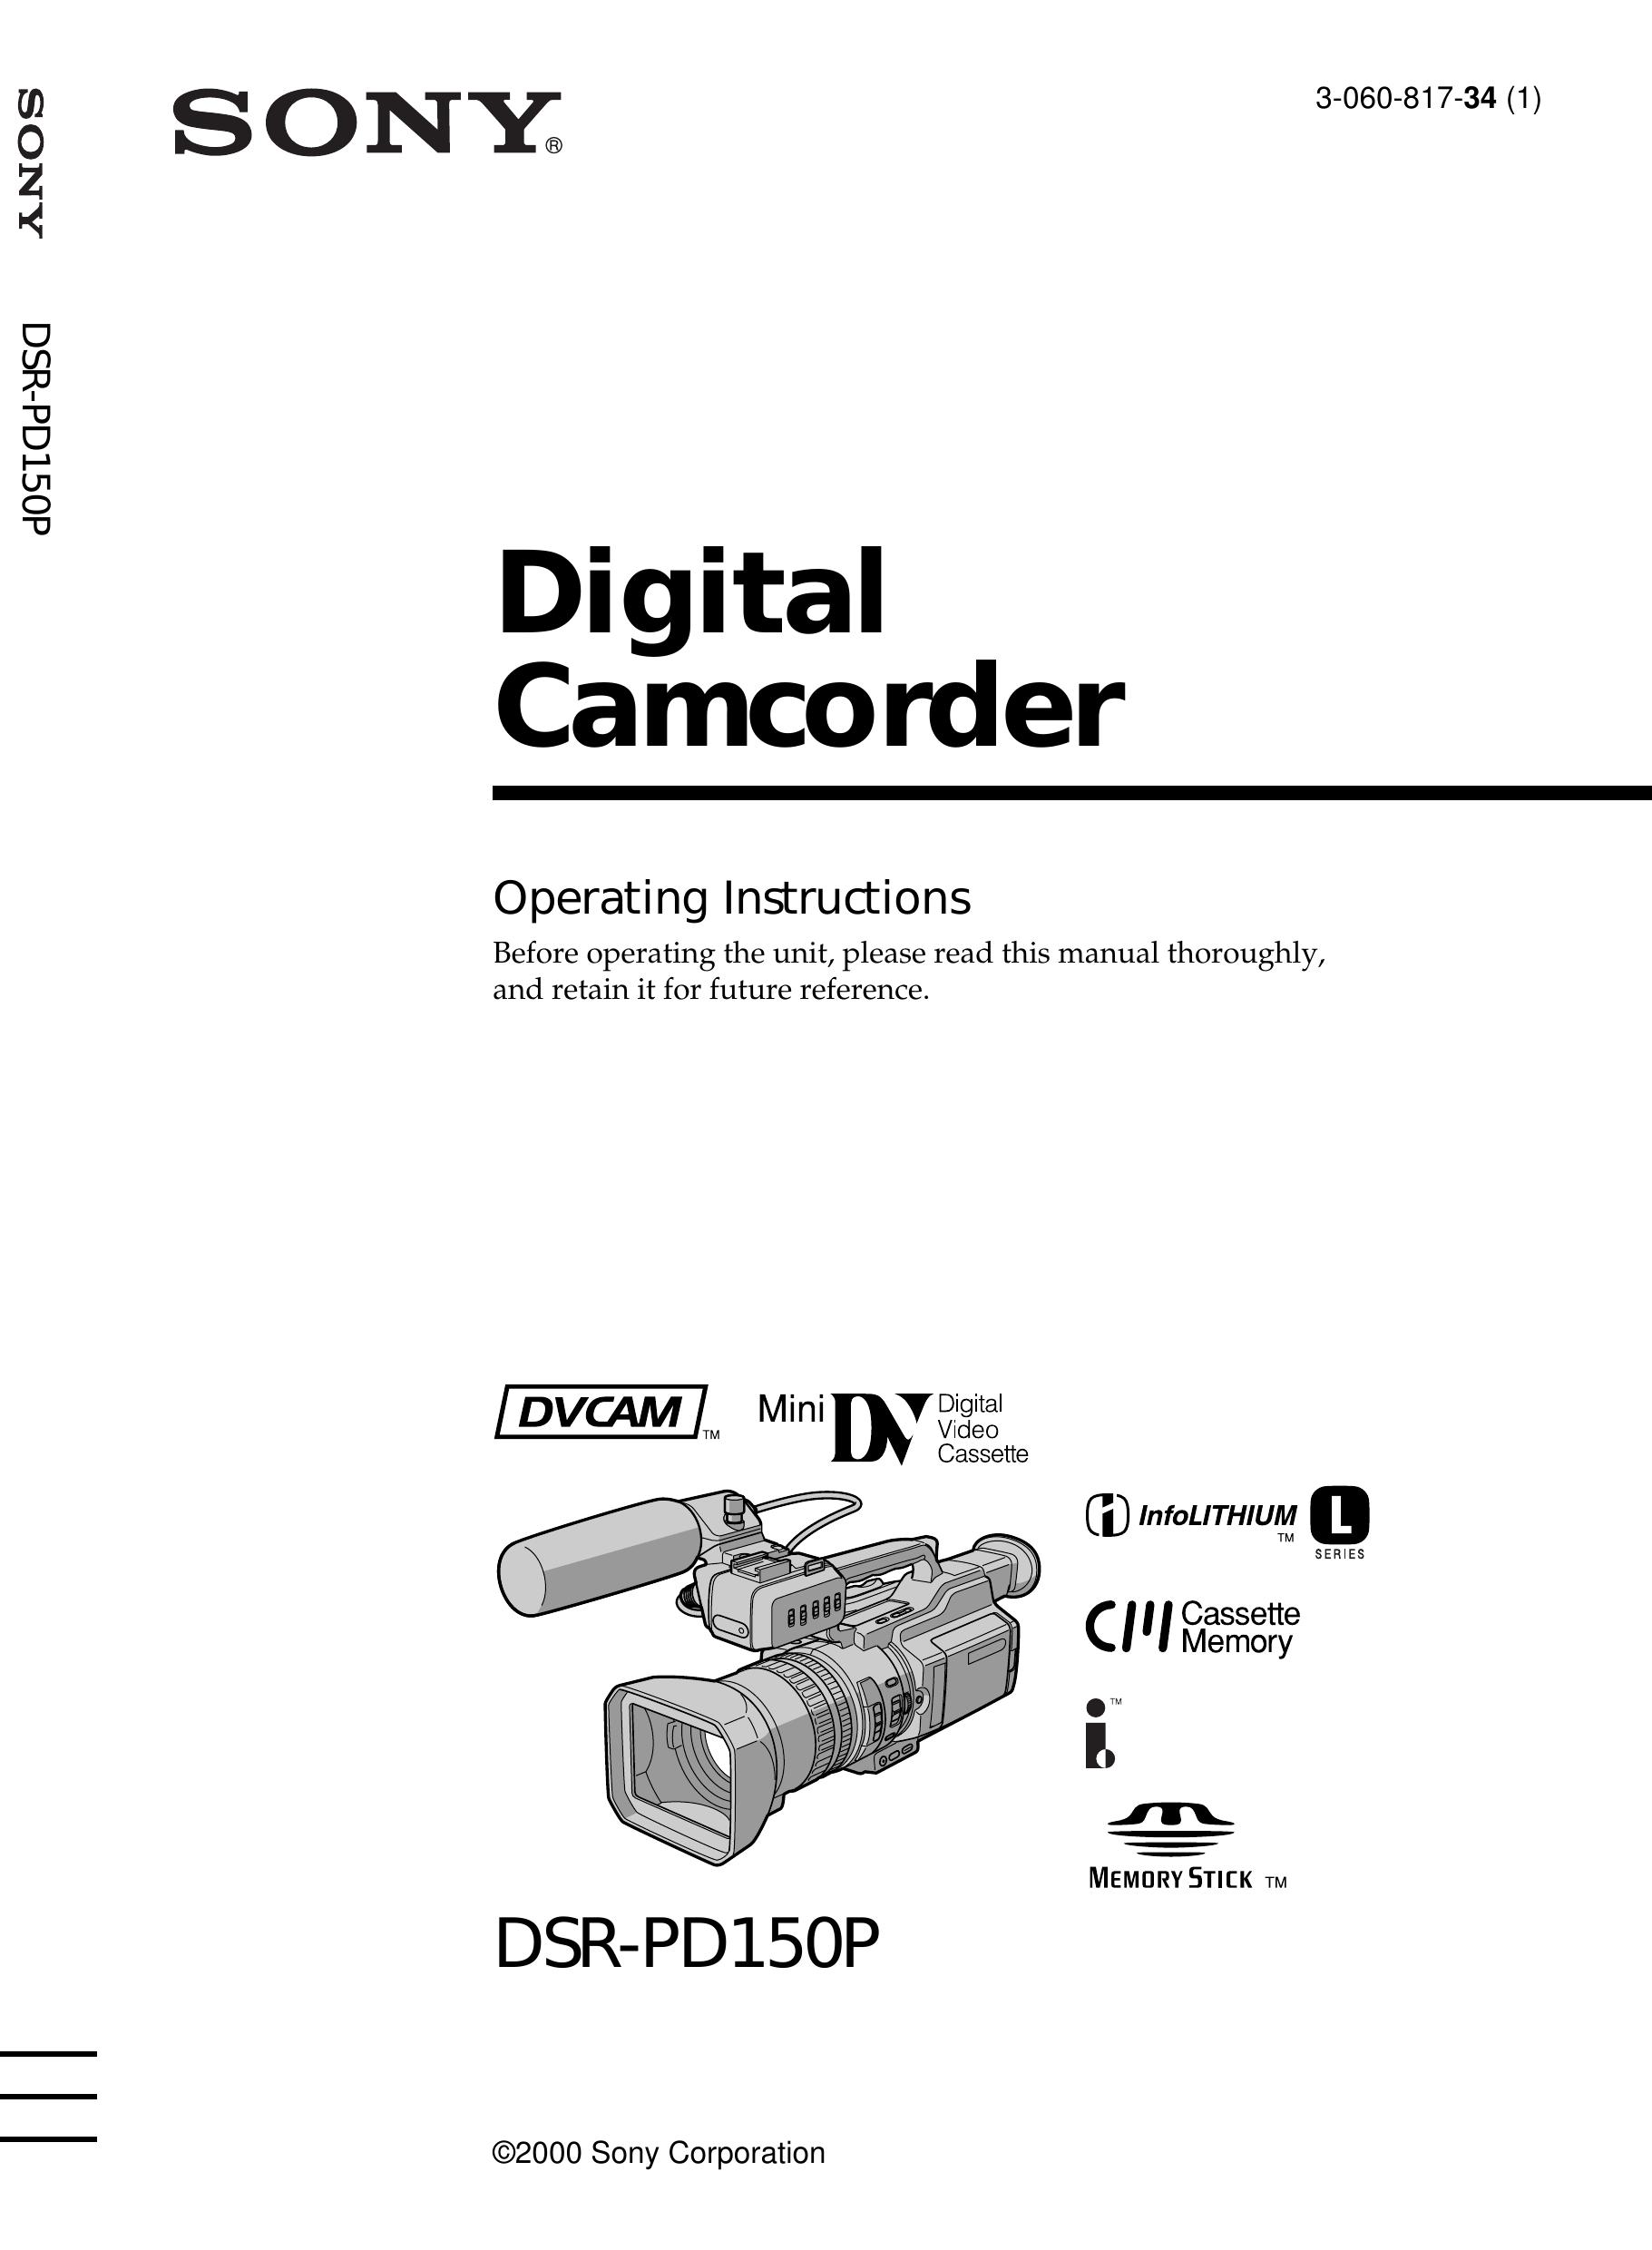 Sharp DSR-PD150P Camcorder User Manual